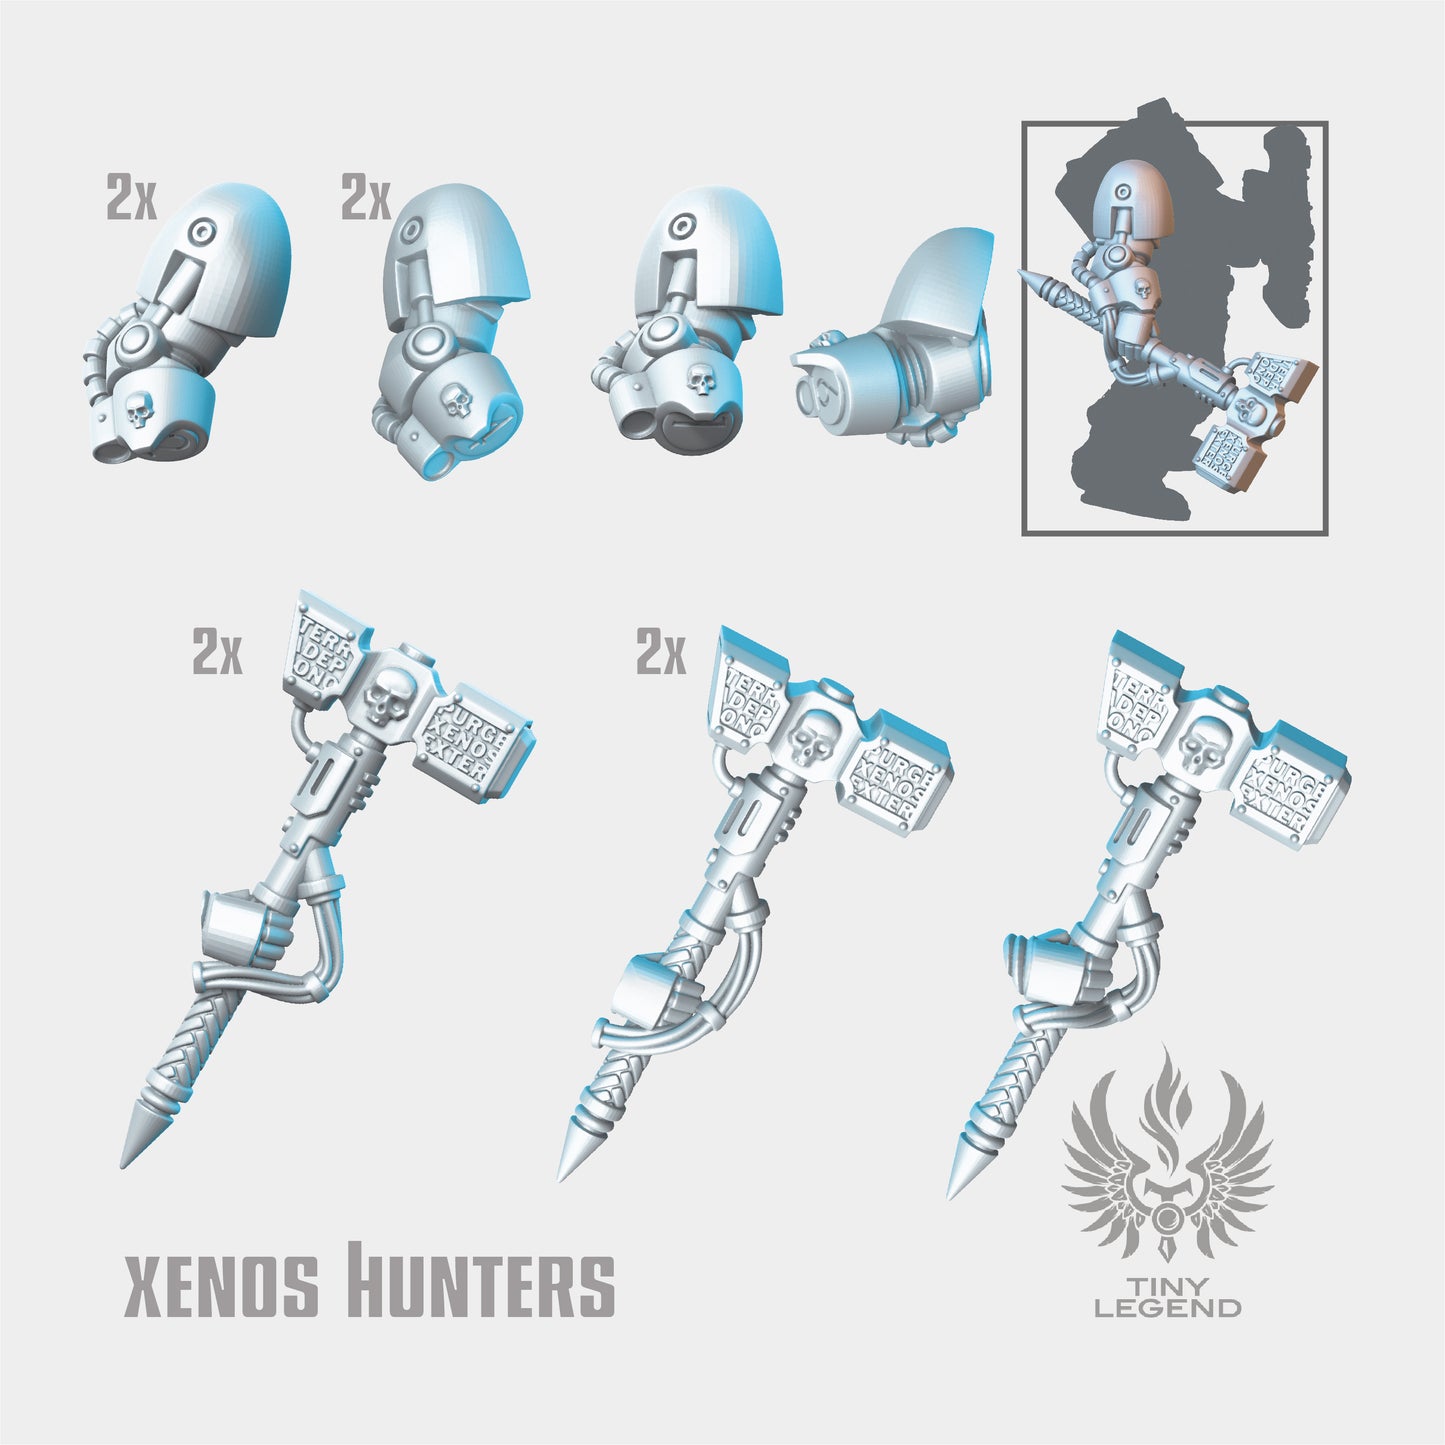 Deep Strike Xenos Hunters Thunder hammers STL